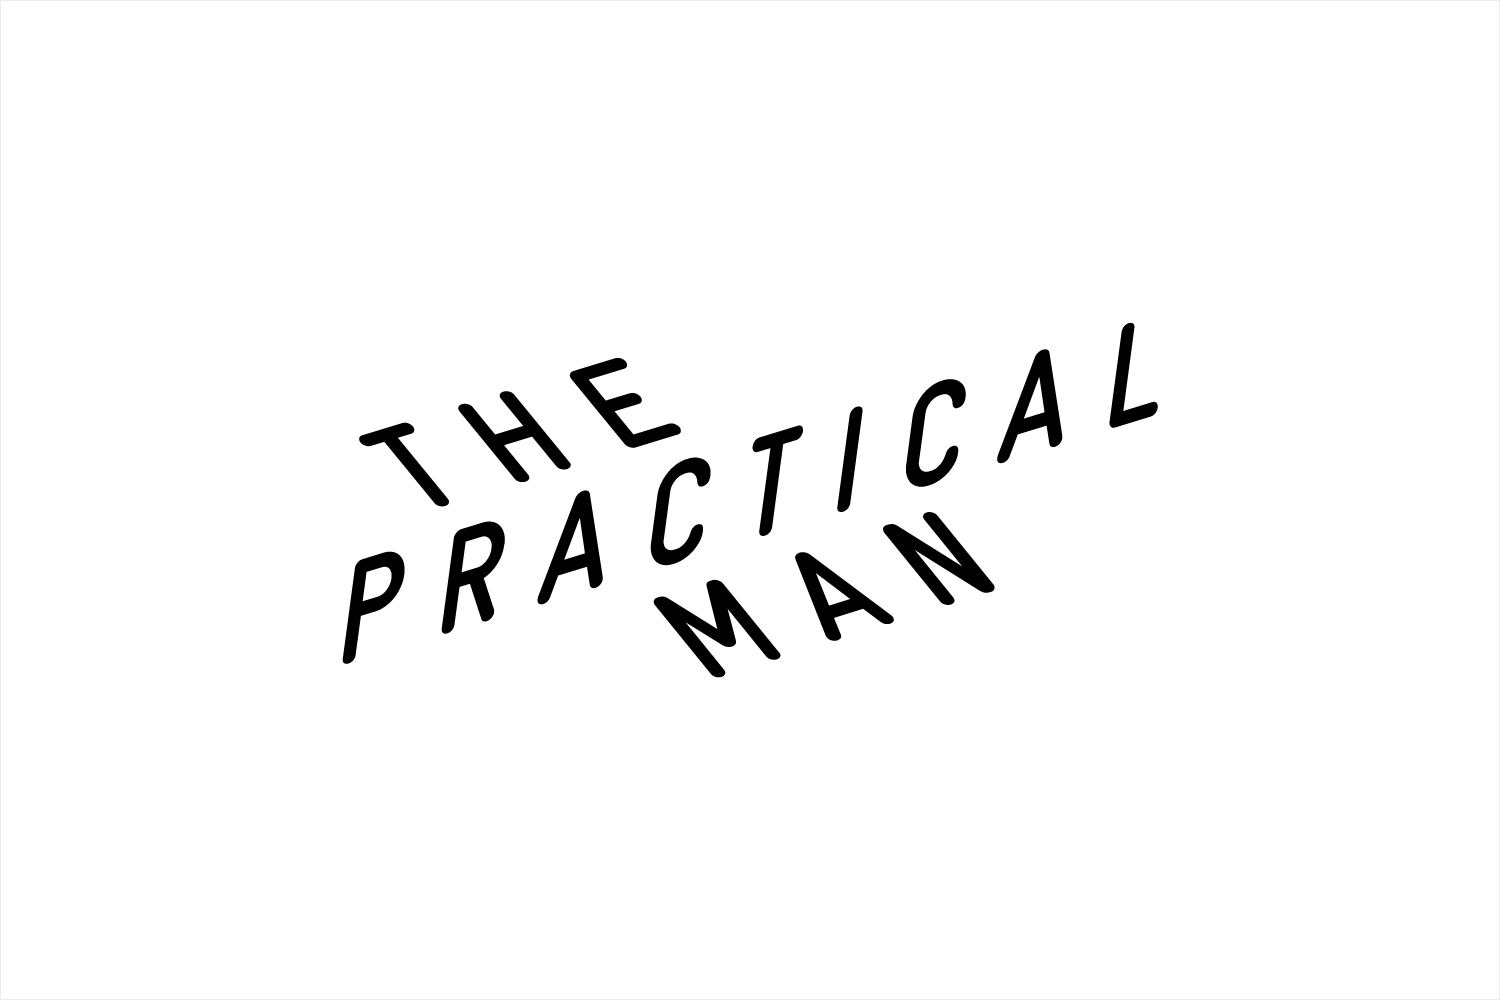 Logotype for online sports and fashion retailer The Practical Man by Australian graphic design studio Garbett